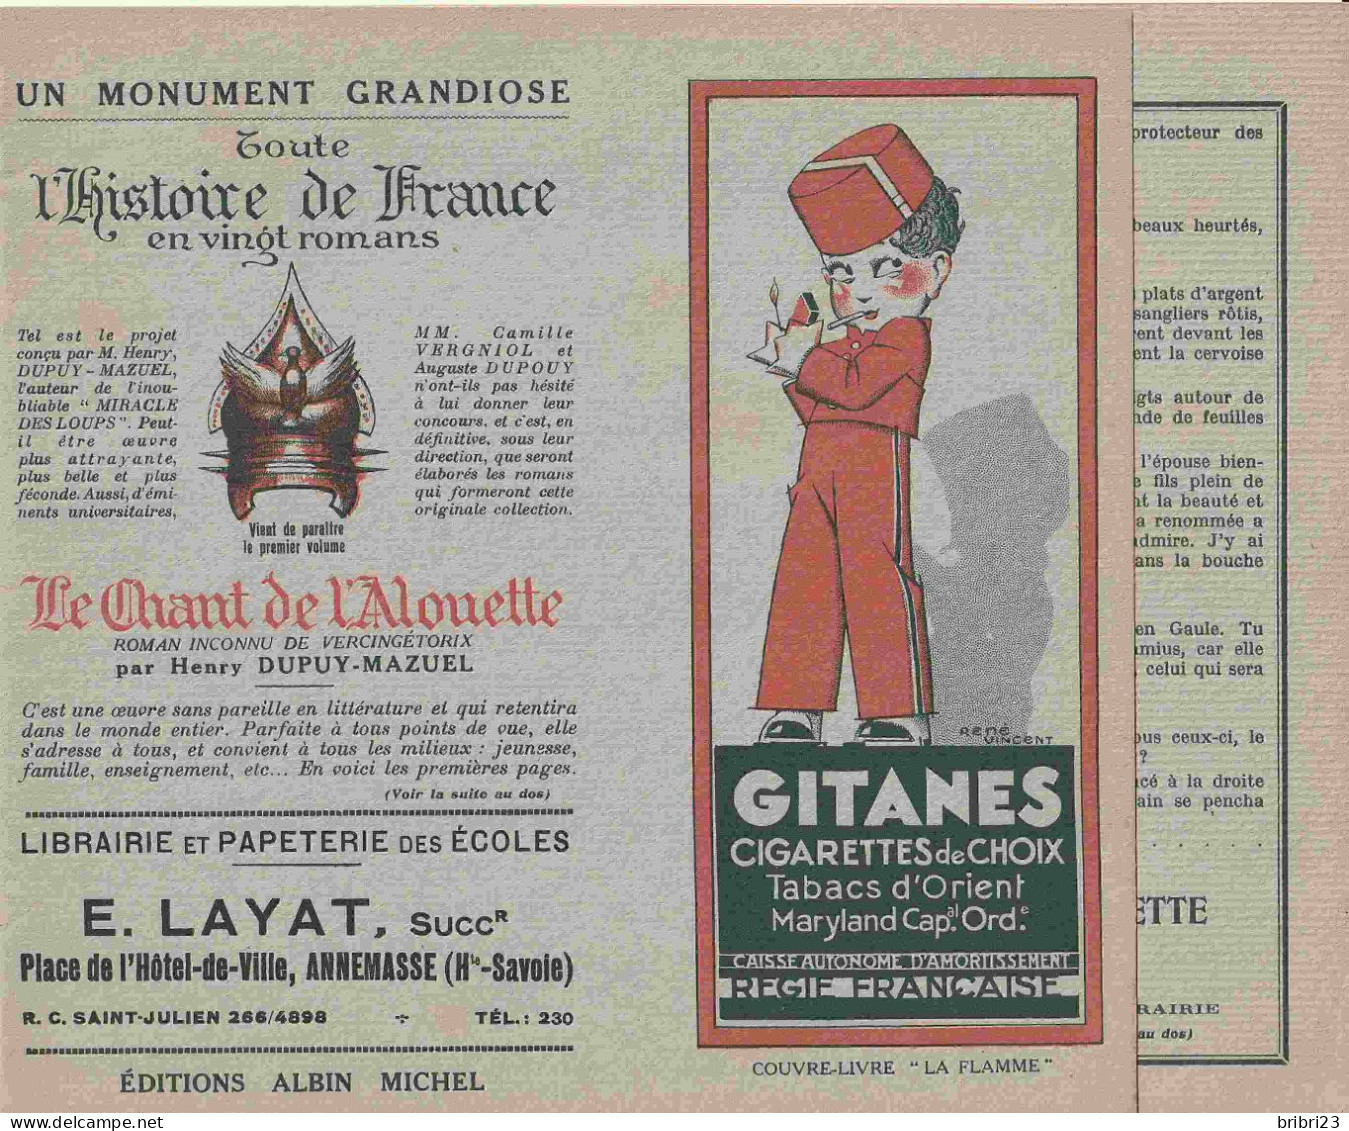 COUVRE-LIVRE " LA FLAMME " PUBLICITE LIBRAIRIE Annemasse - CIGARETTES GITANES BALTO - Tabaco & Cigarrillos